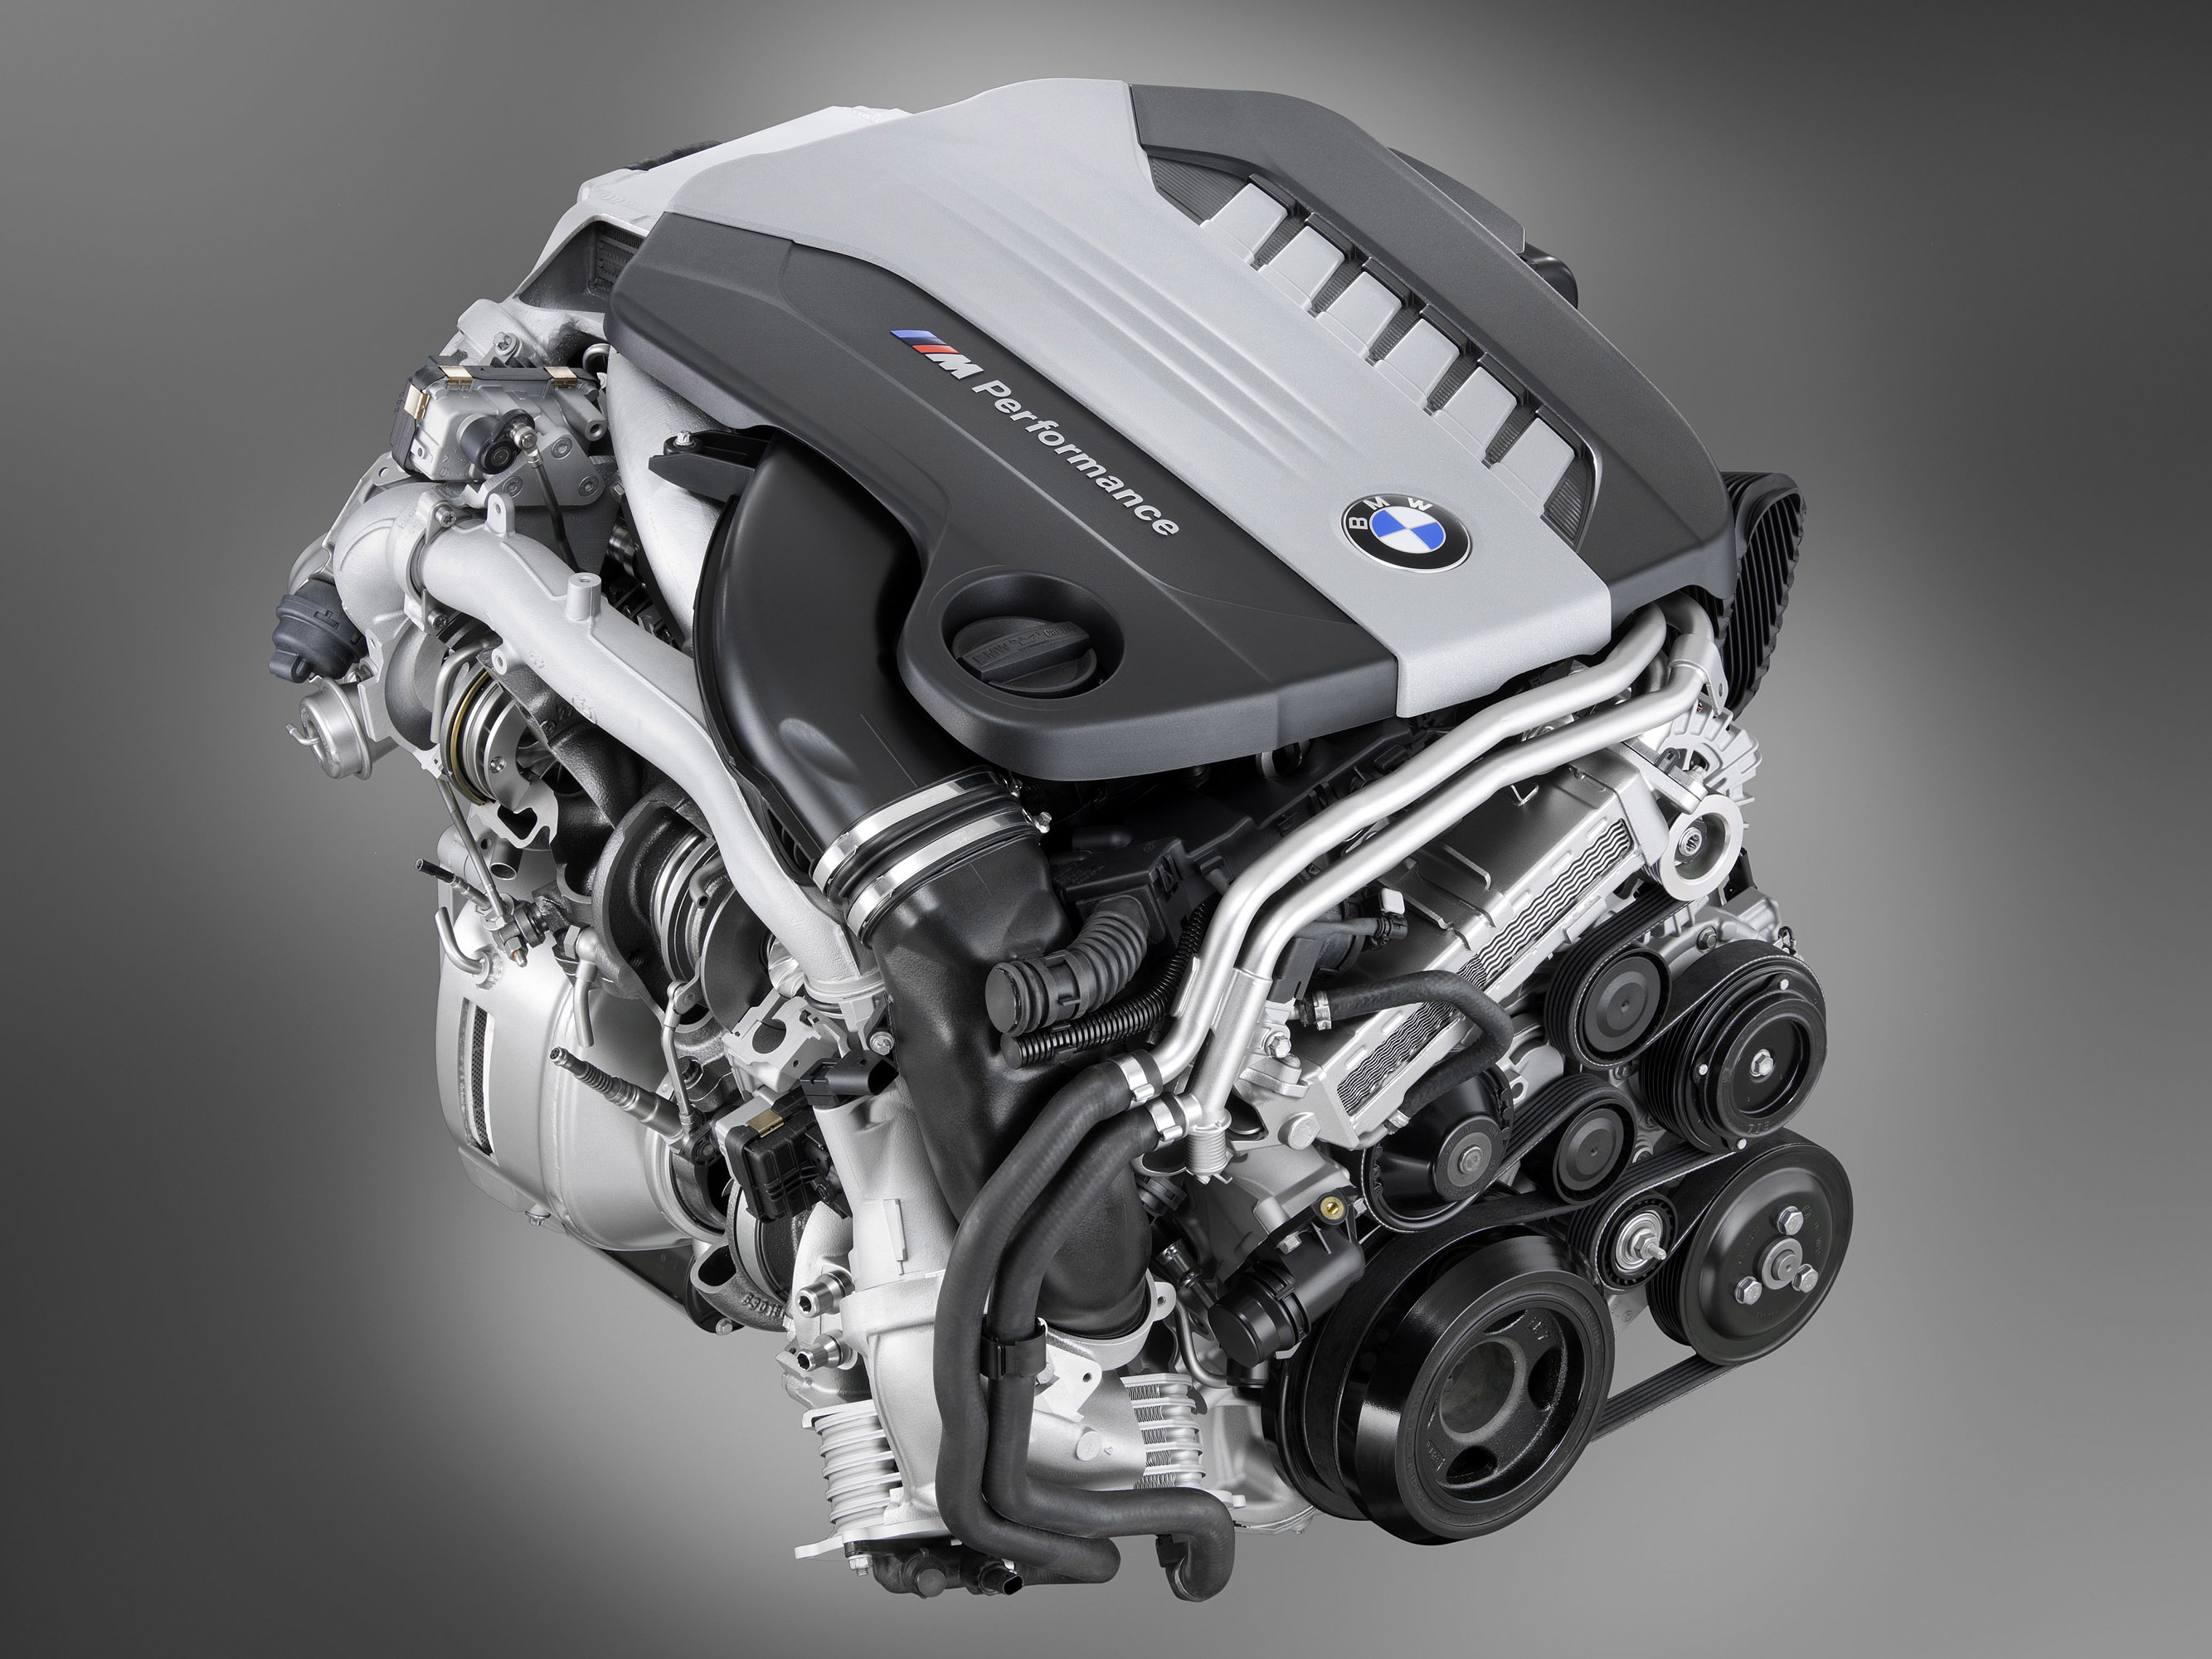 Двигатель двигатель 1 3 литра. БМВ n57 дизель. N57 BMW двигатель. БМВ x6 m57 двигатель. Двигатель БМВ n57 3.0.